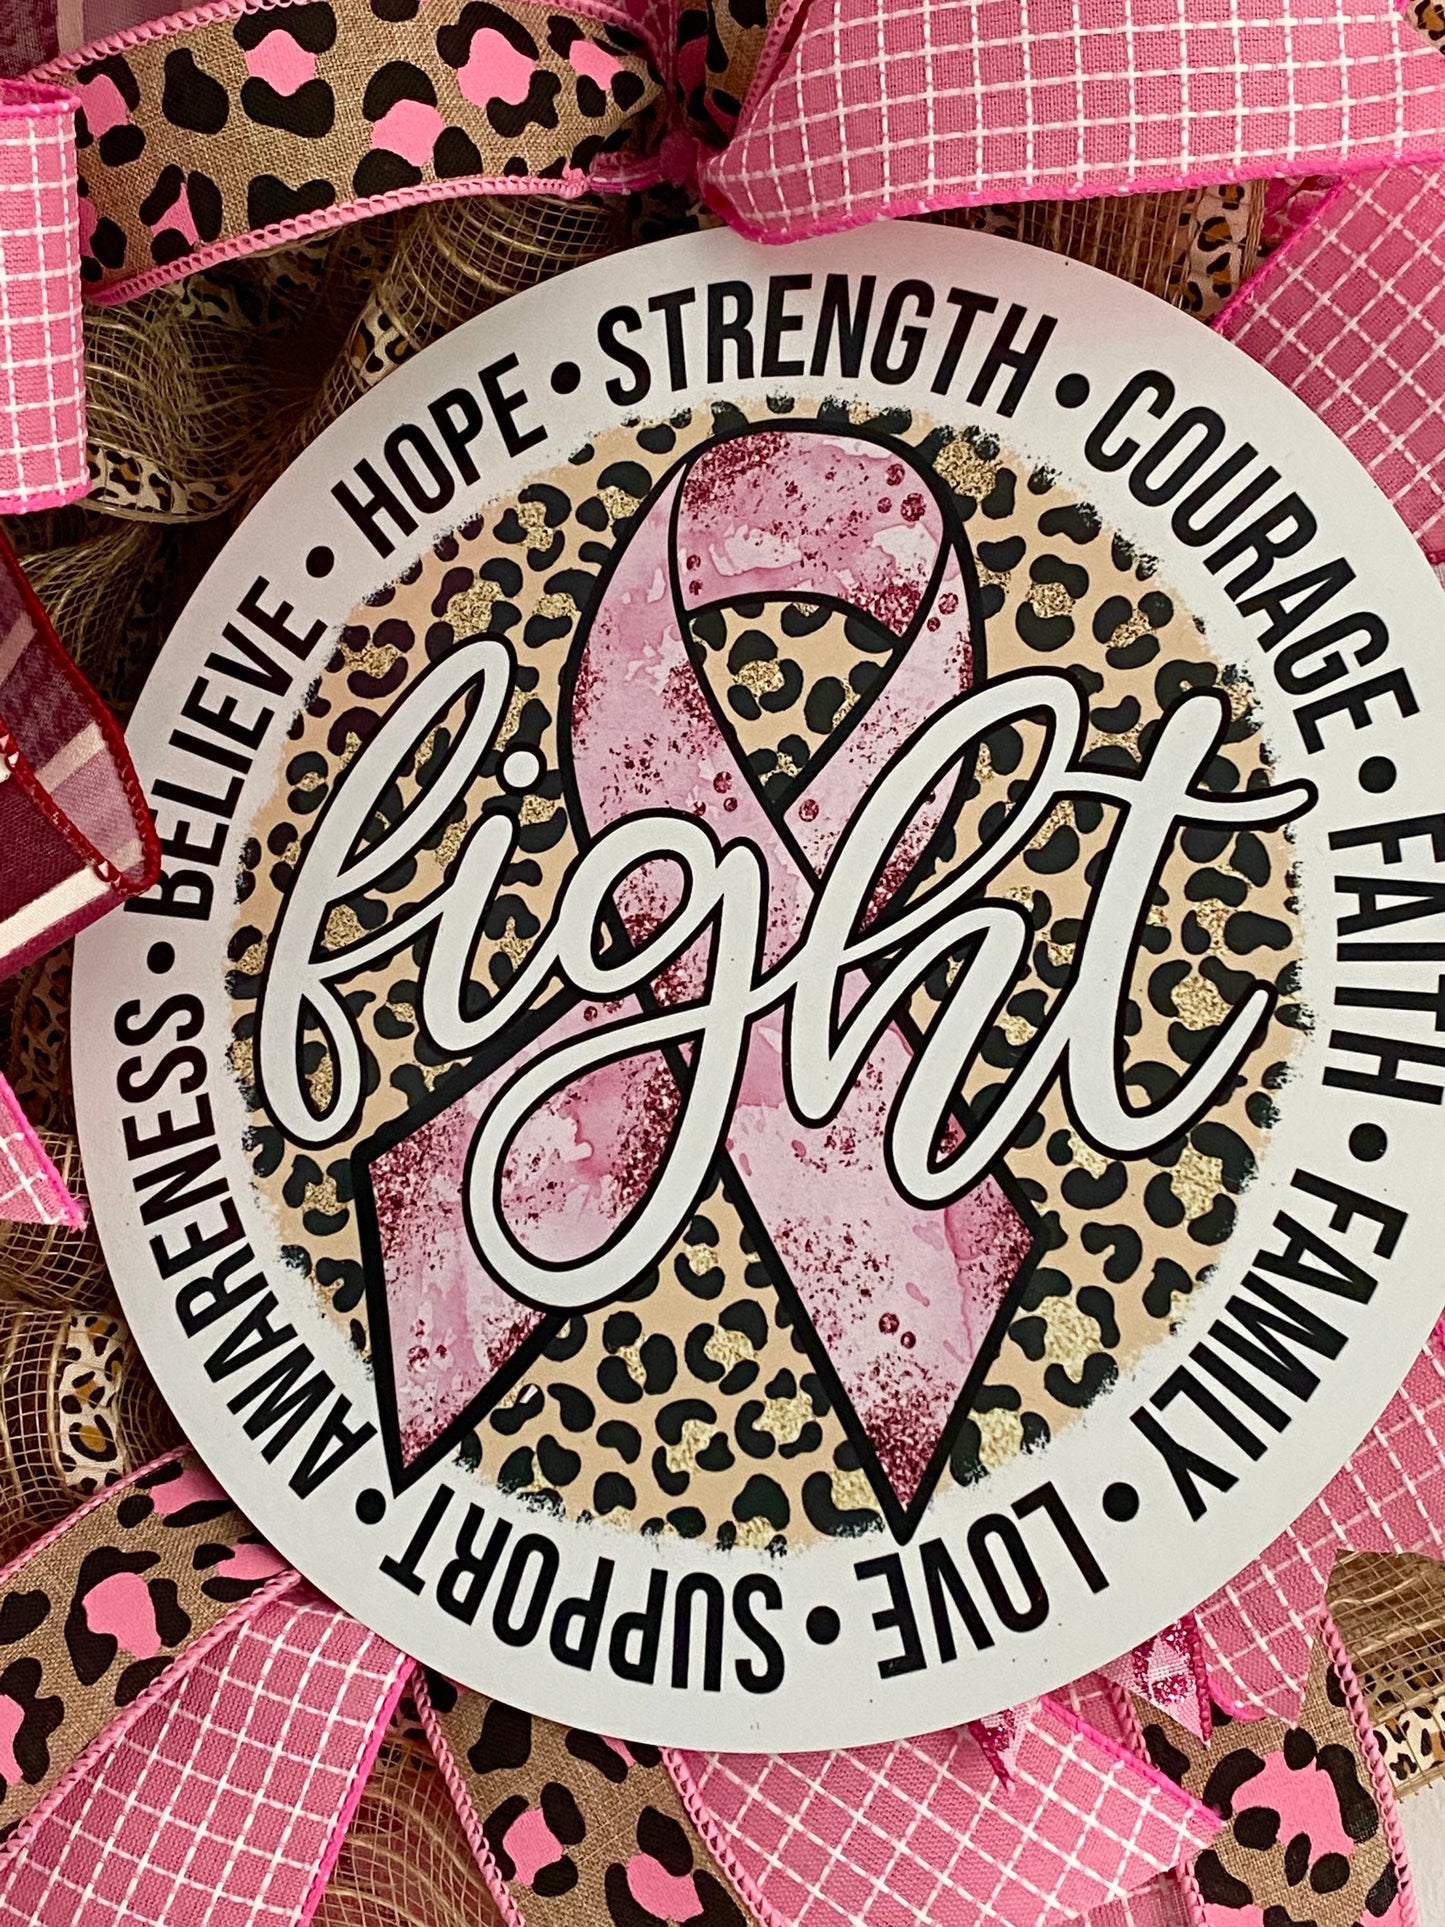 Breast Cancer Awareness Pink Wreath, Cancer Fighter Warrior Survivor Gift, Pink Cheetah Fight Cancer Hope Door Decor